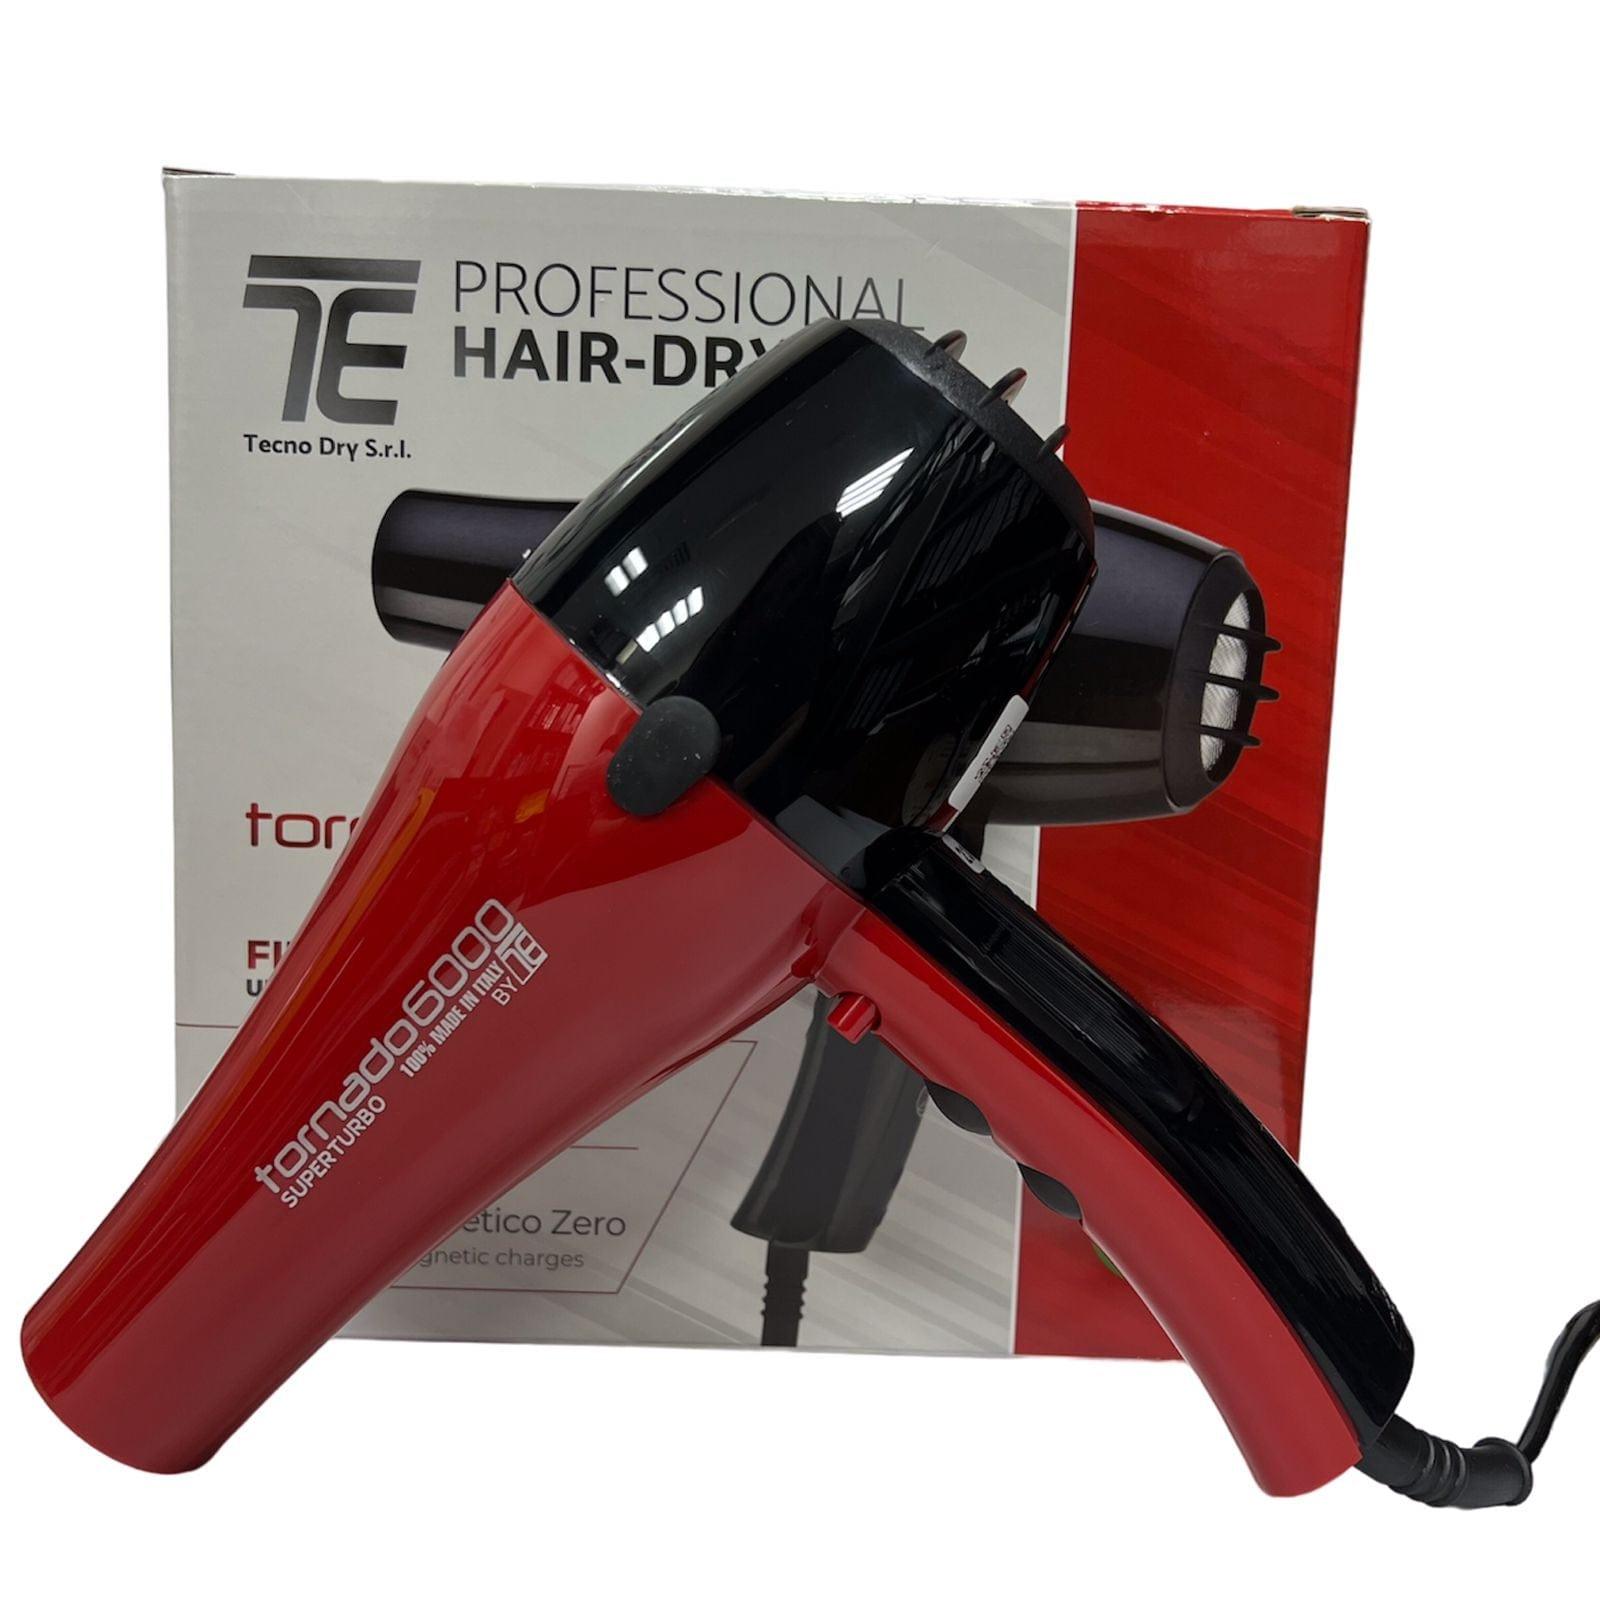 Tecno Elettra Tornado 6000 Super Turbo Professional Hair Dryer Red & Black 2500W